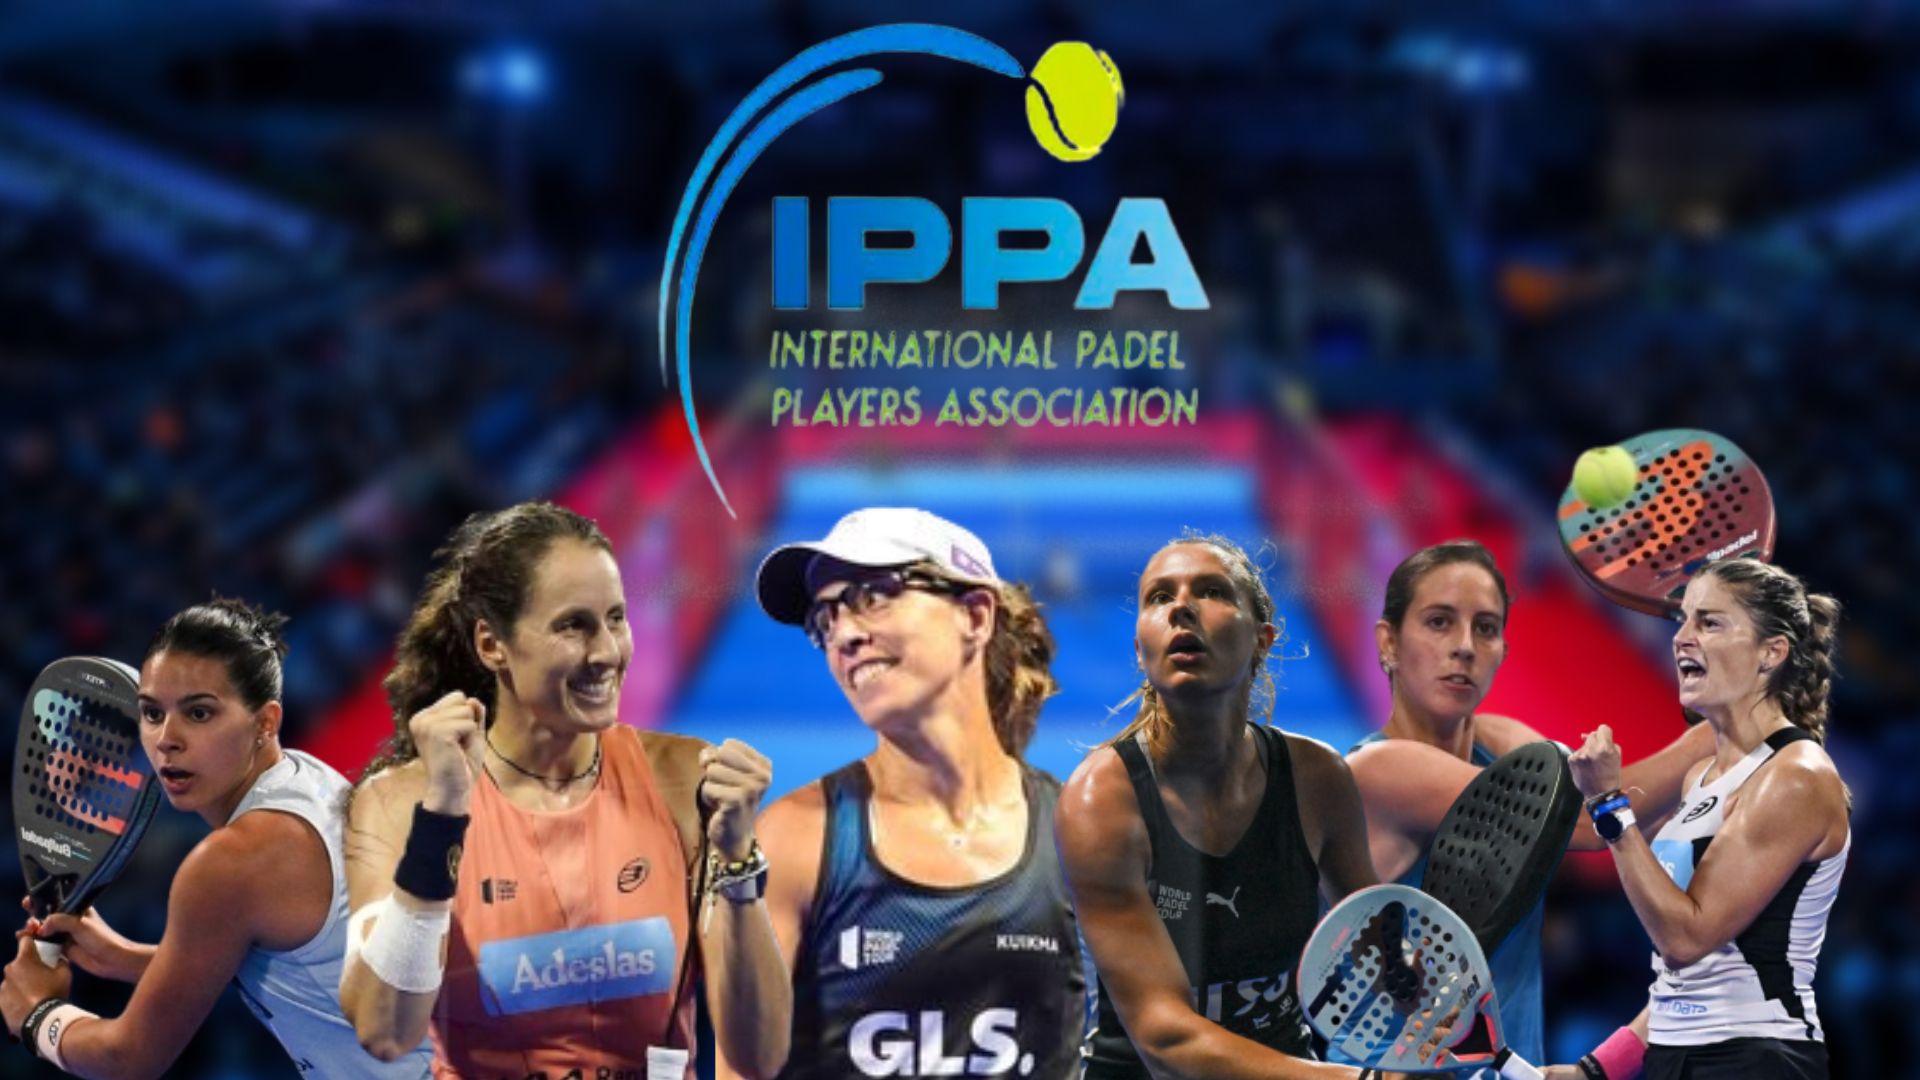 IPPA International Padel Pigernes Spillerforening